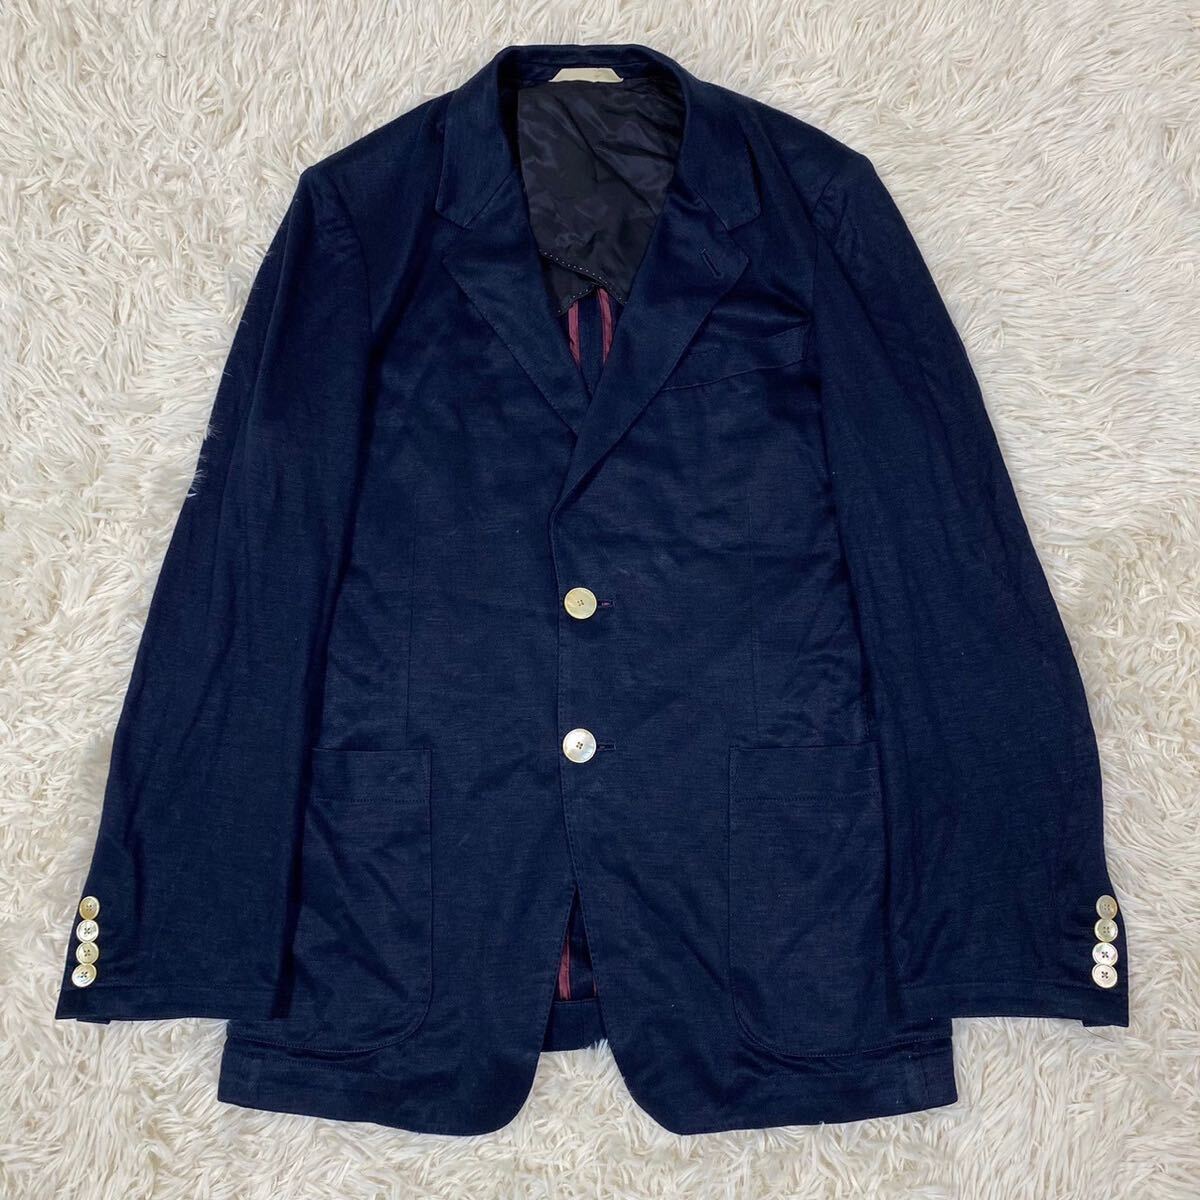  Paul Smith коллекция linen100% L размер tailored jacket ракушка кнопка темно-синий трубчатая обводка лен ..2B PaulSmith collection